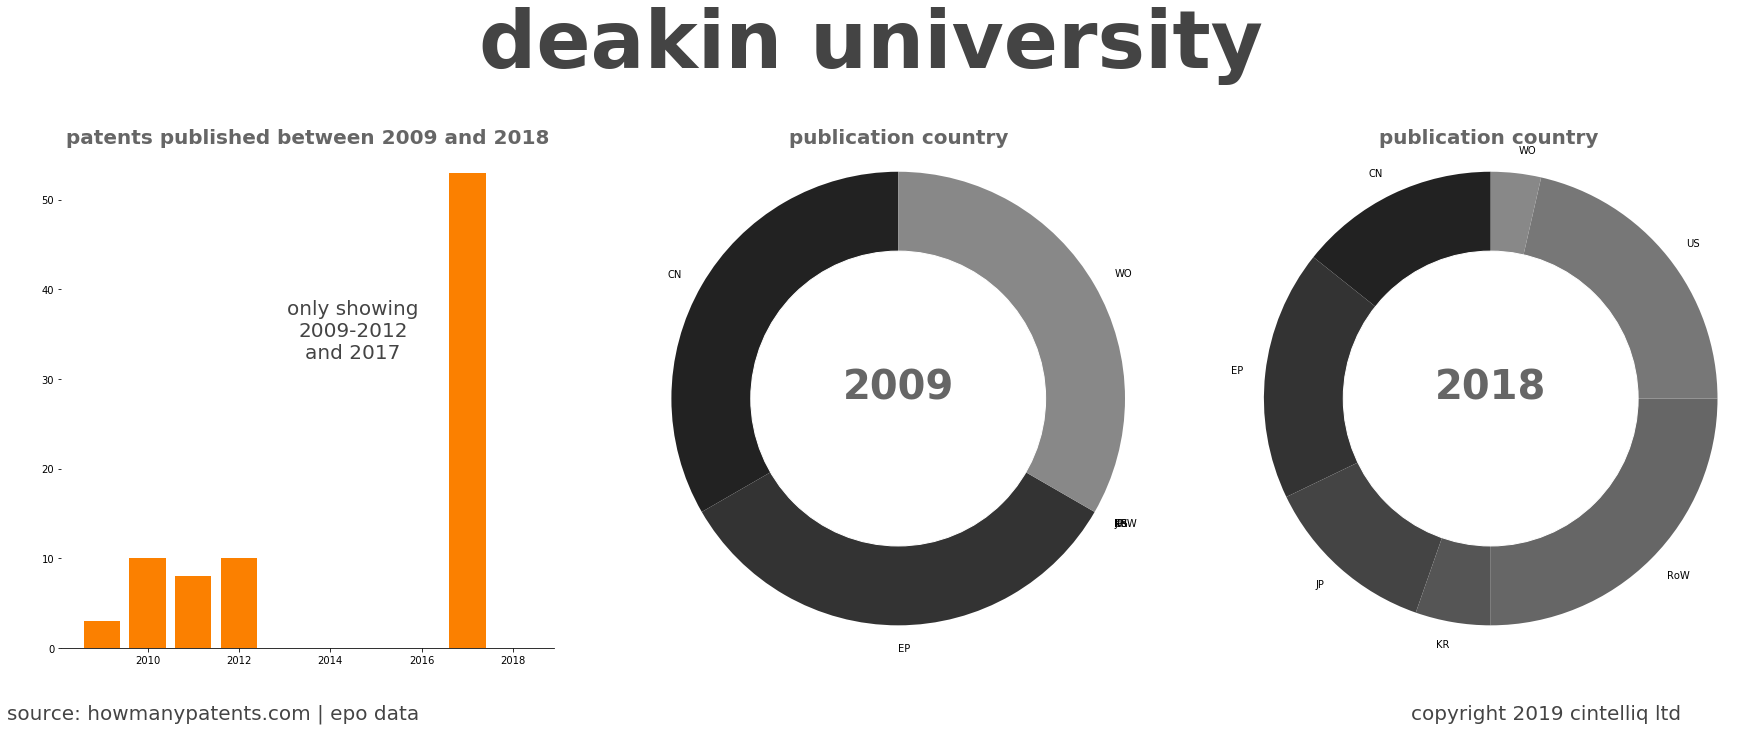 summary of patents for Deakin University